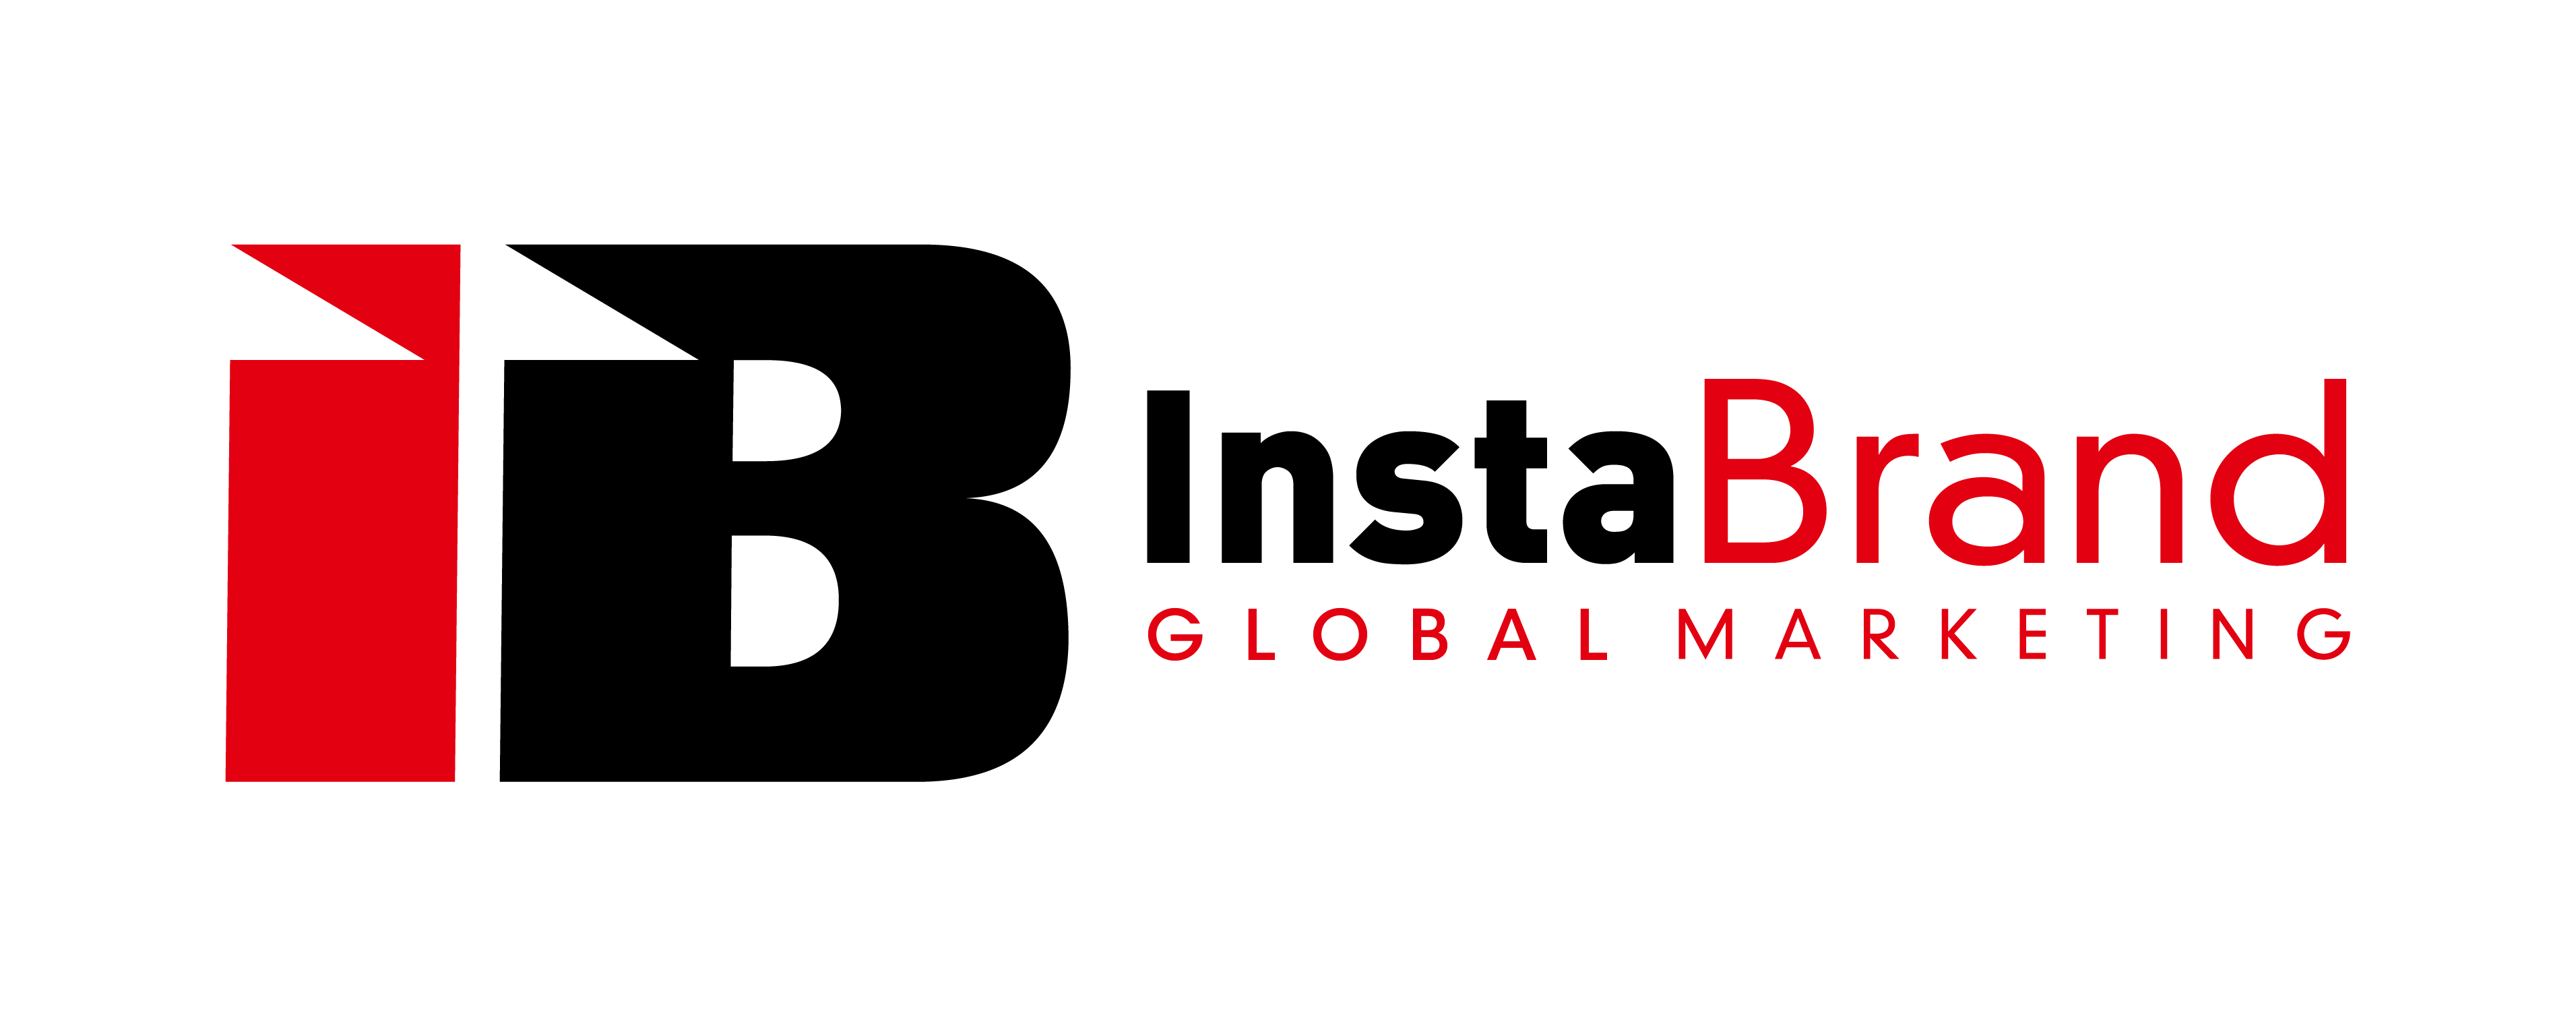 InstaBond Global Marketing